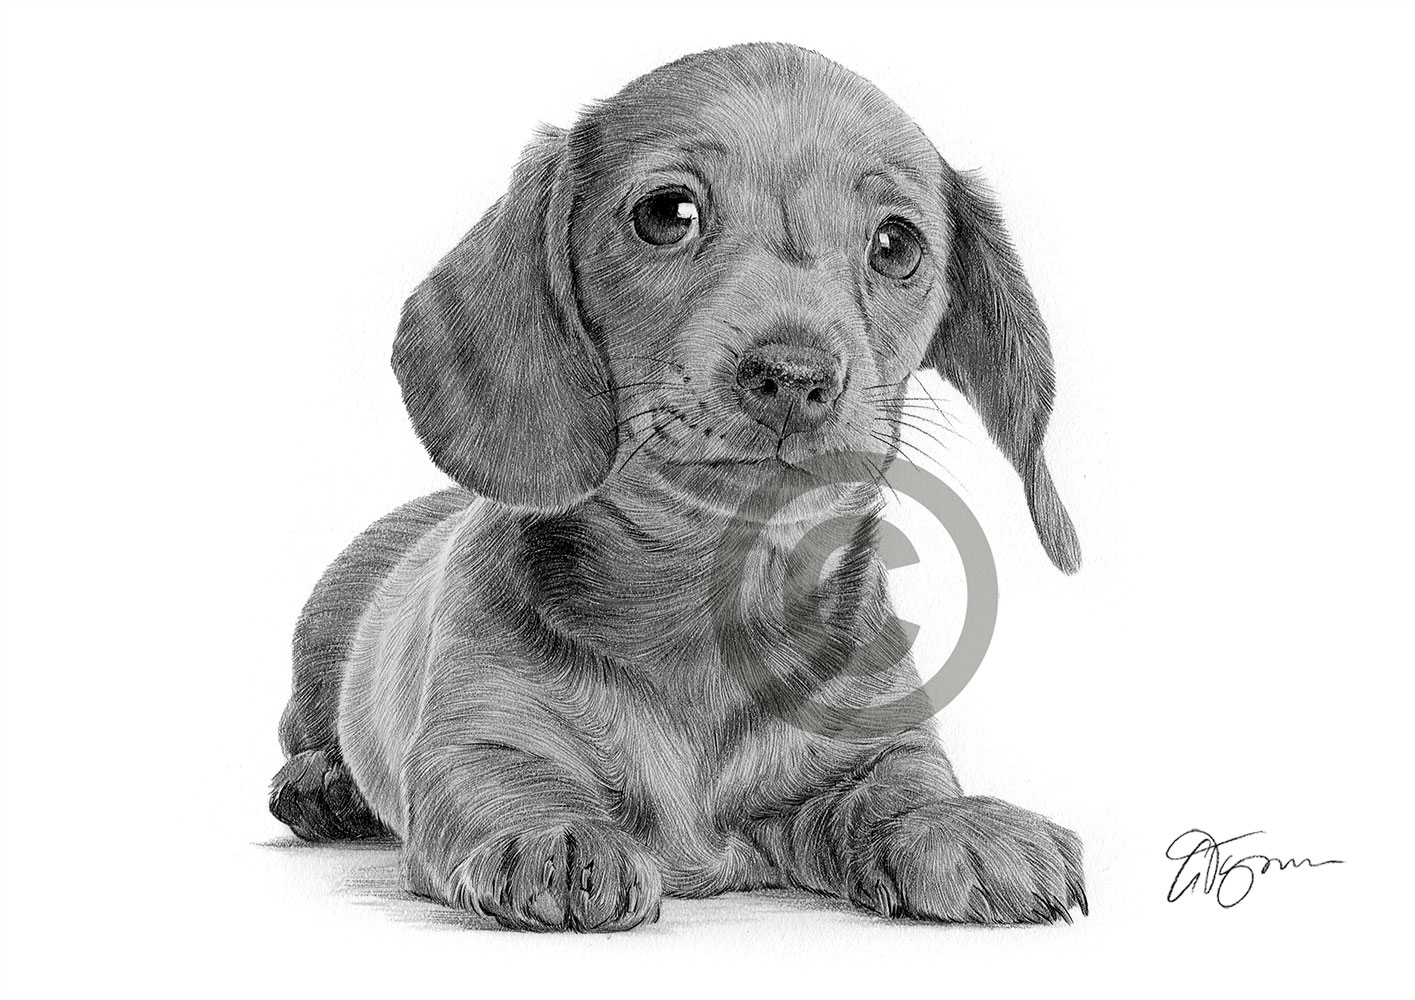 Pencil drawing of a Dachshund puppy by artist Gary Tymon